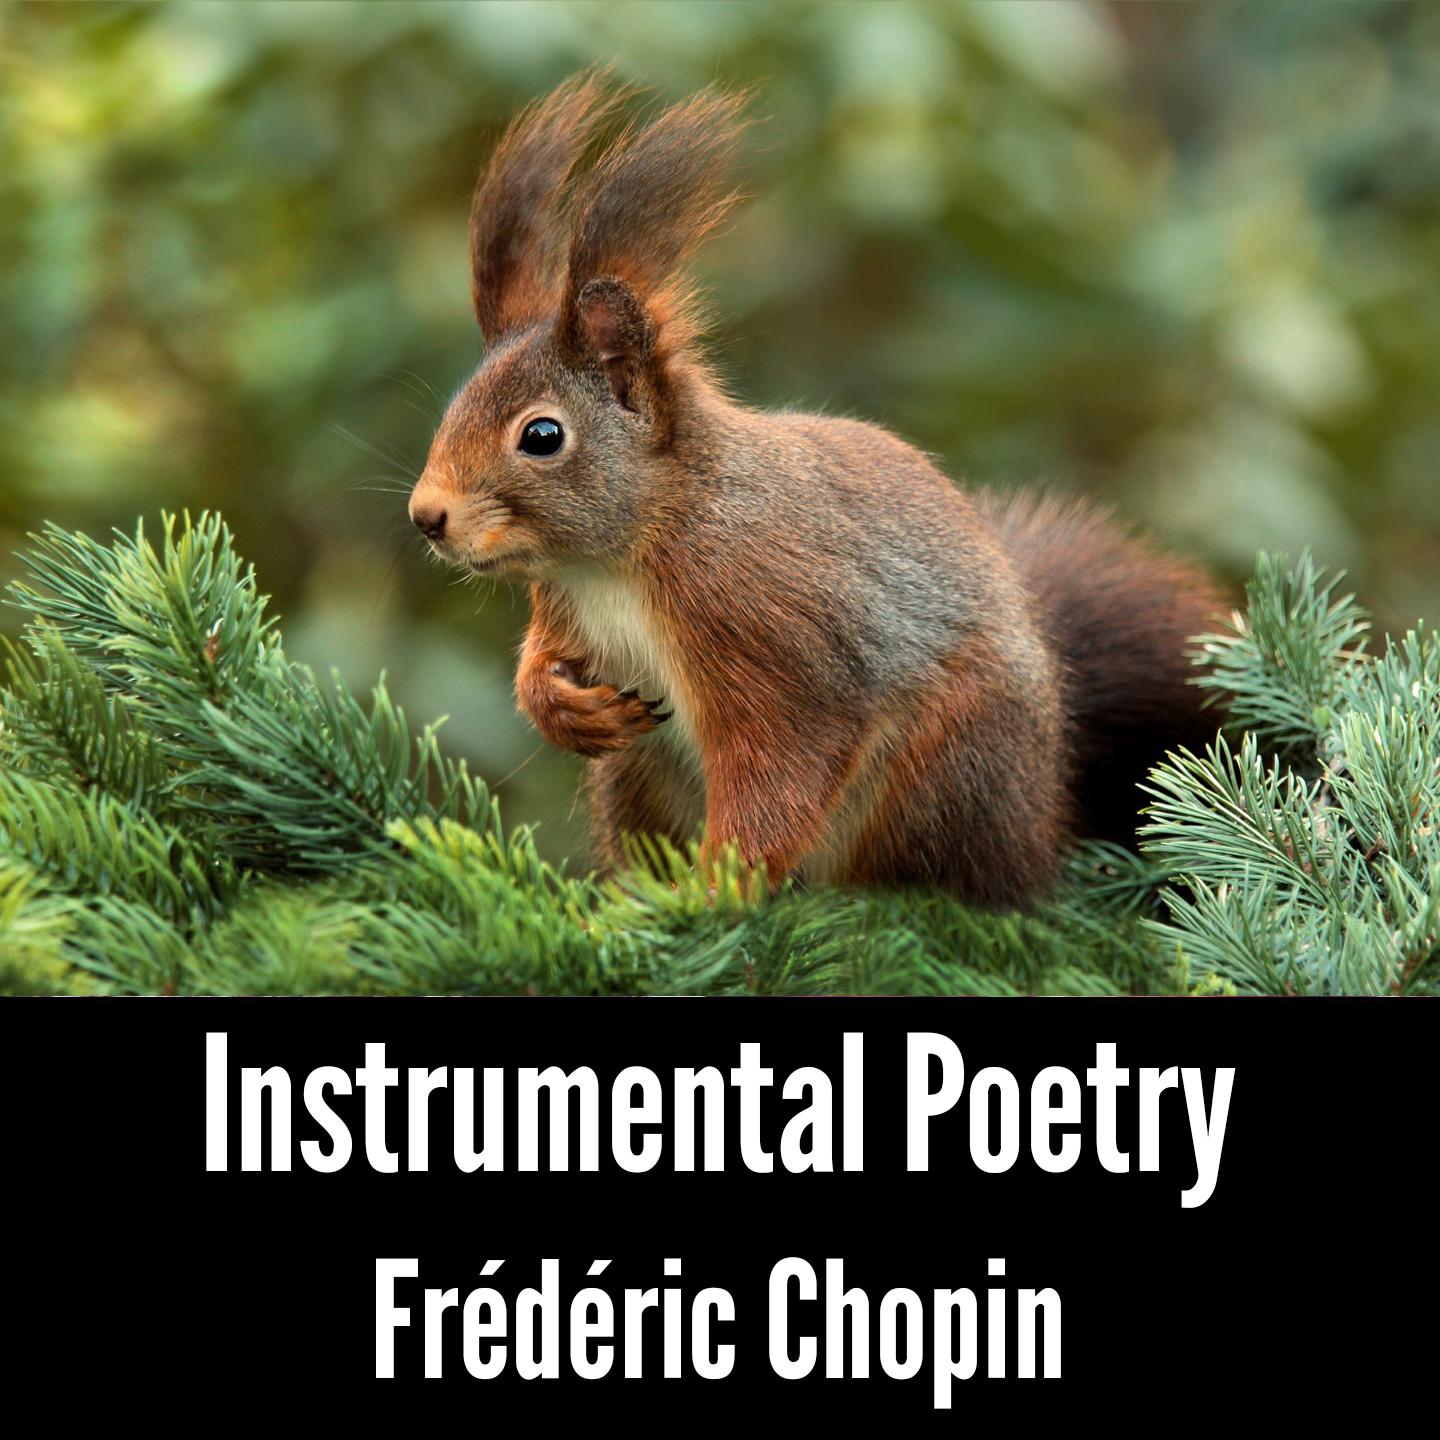 Instrumental Poetry: Frédéric Chopin